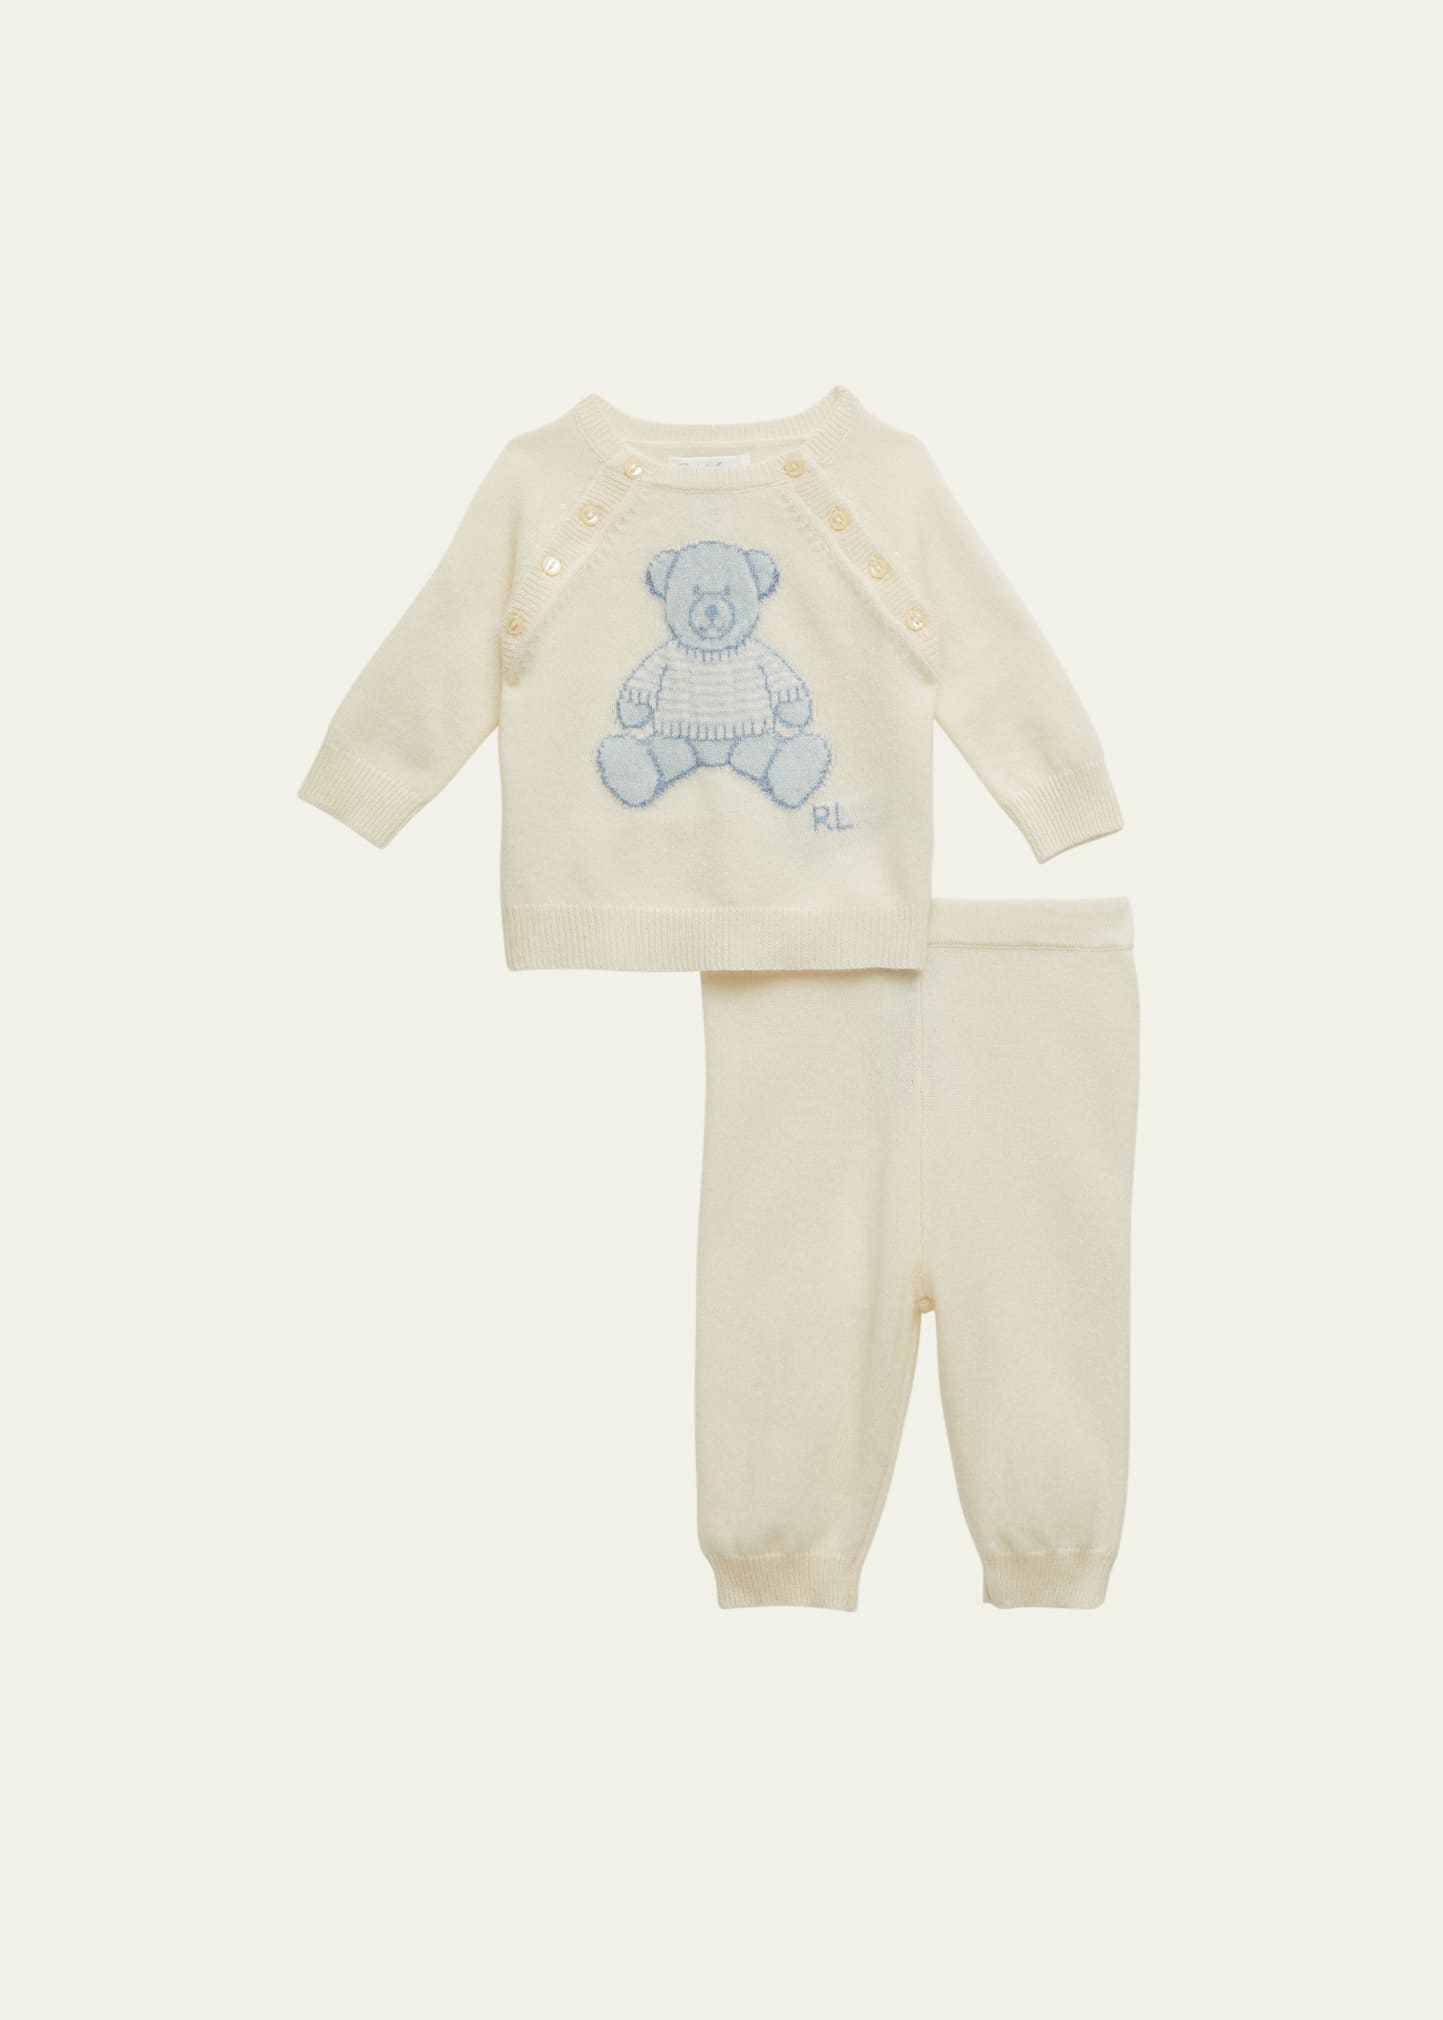 Ralph Lauren Childrenswear Boy's Cashmere Intarsia Knit Bear Sweater And Pants Set, Size 3M-24M